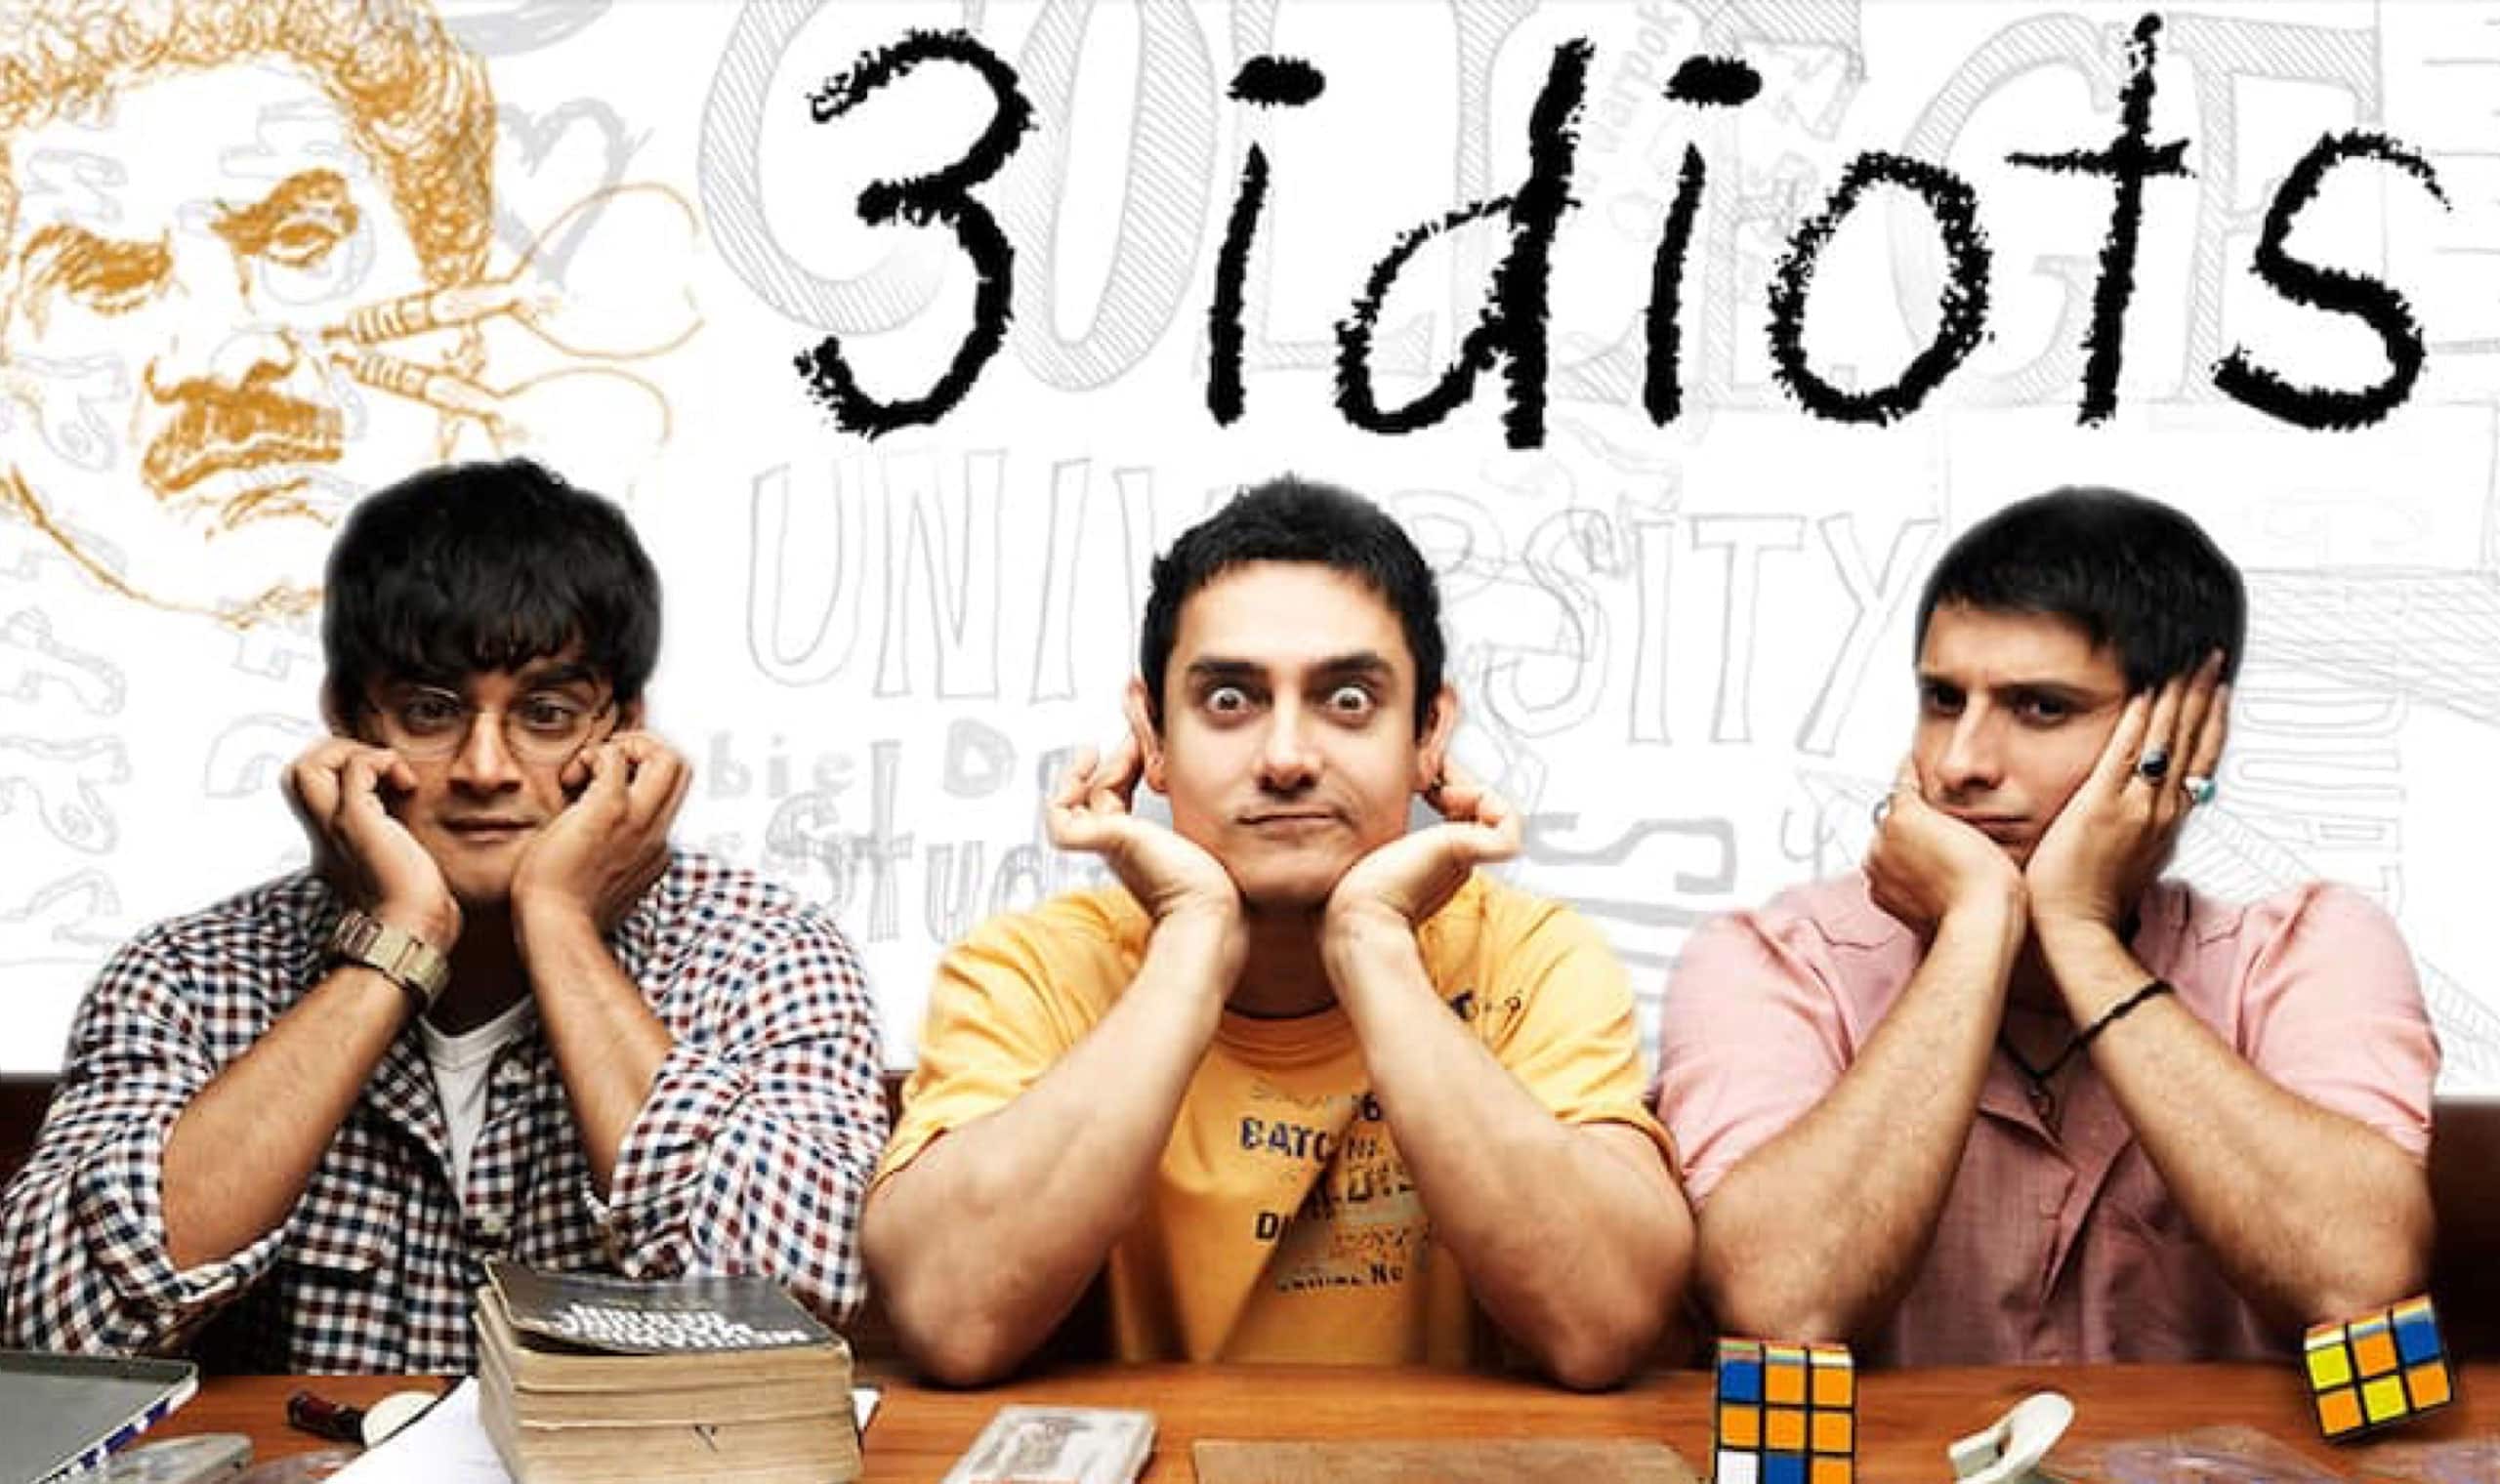 Watch 3 Idiots on Friendship Day!